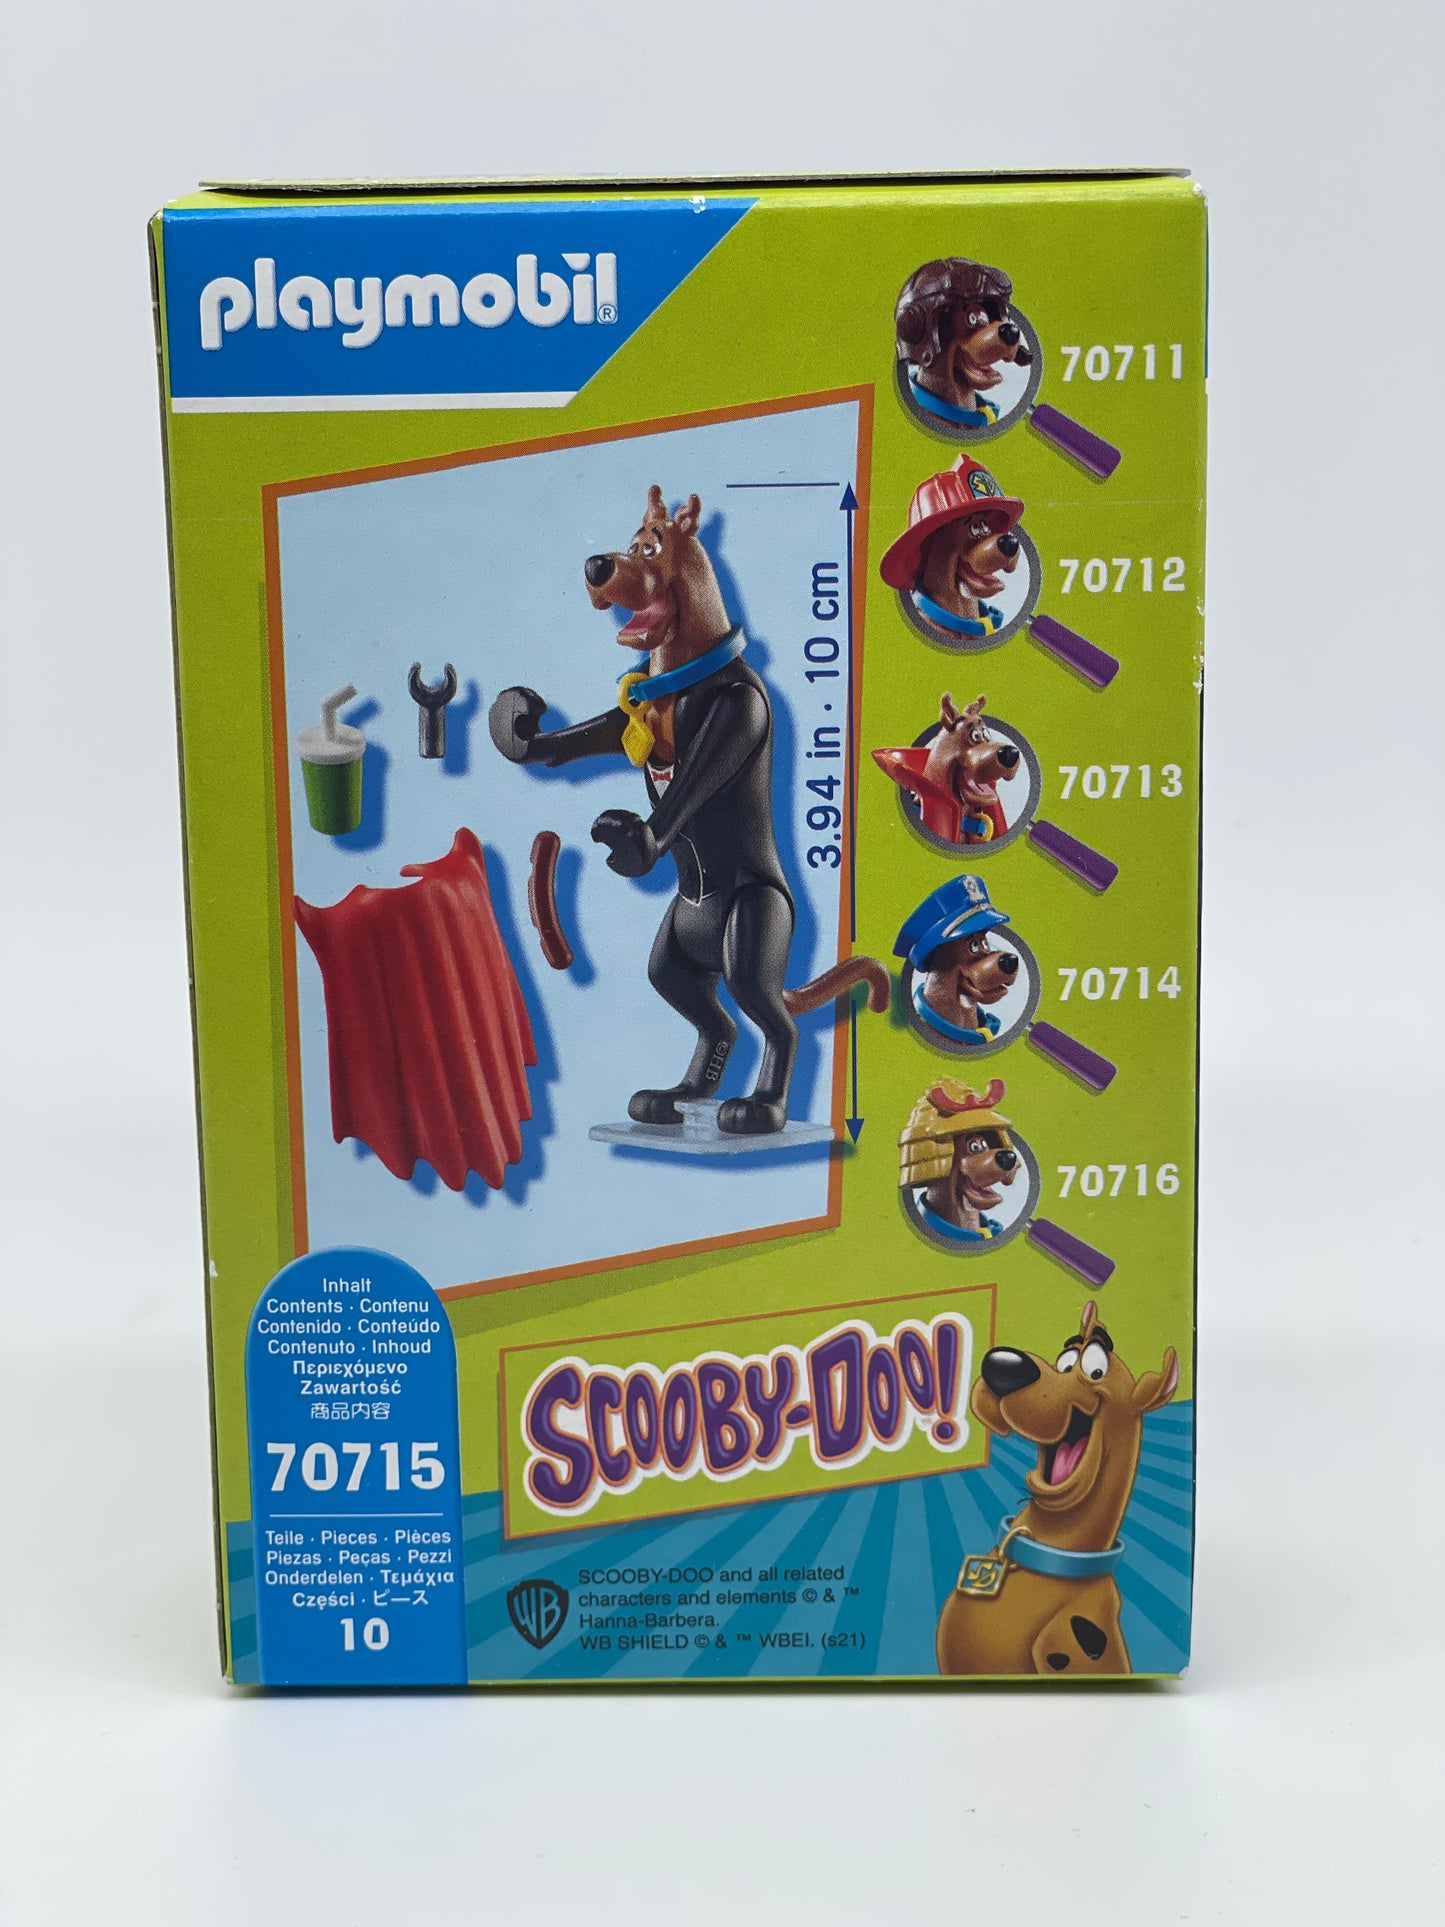 Playmobil "Vampir / Dracula" Scooby Doo mit Zubehör 70715 (2021)